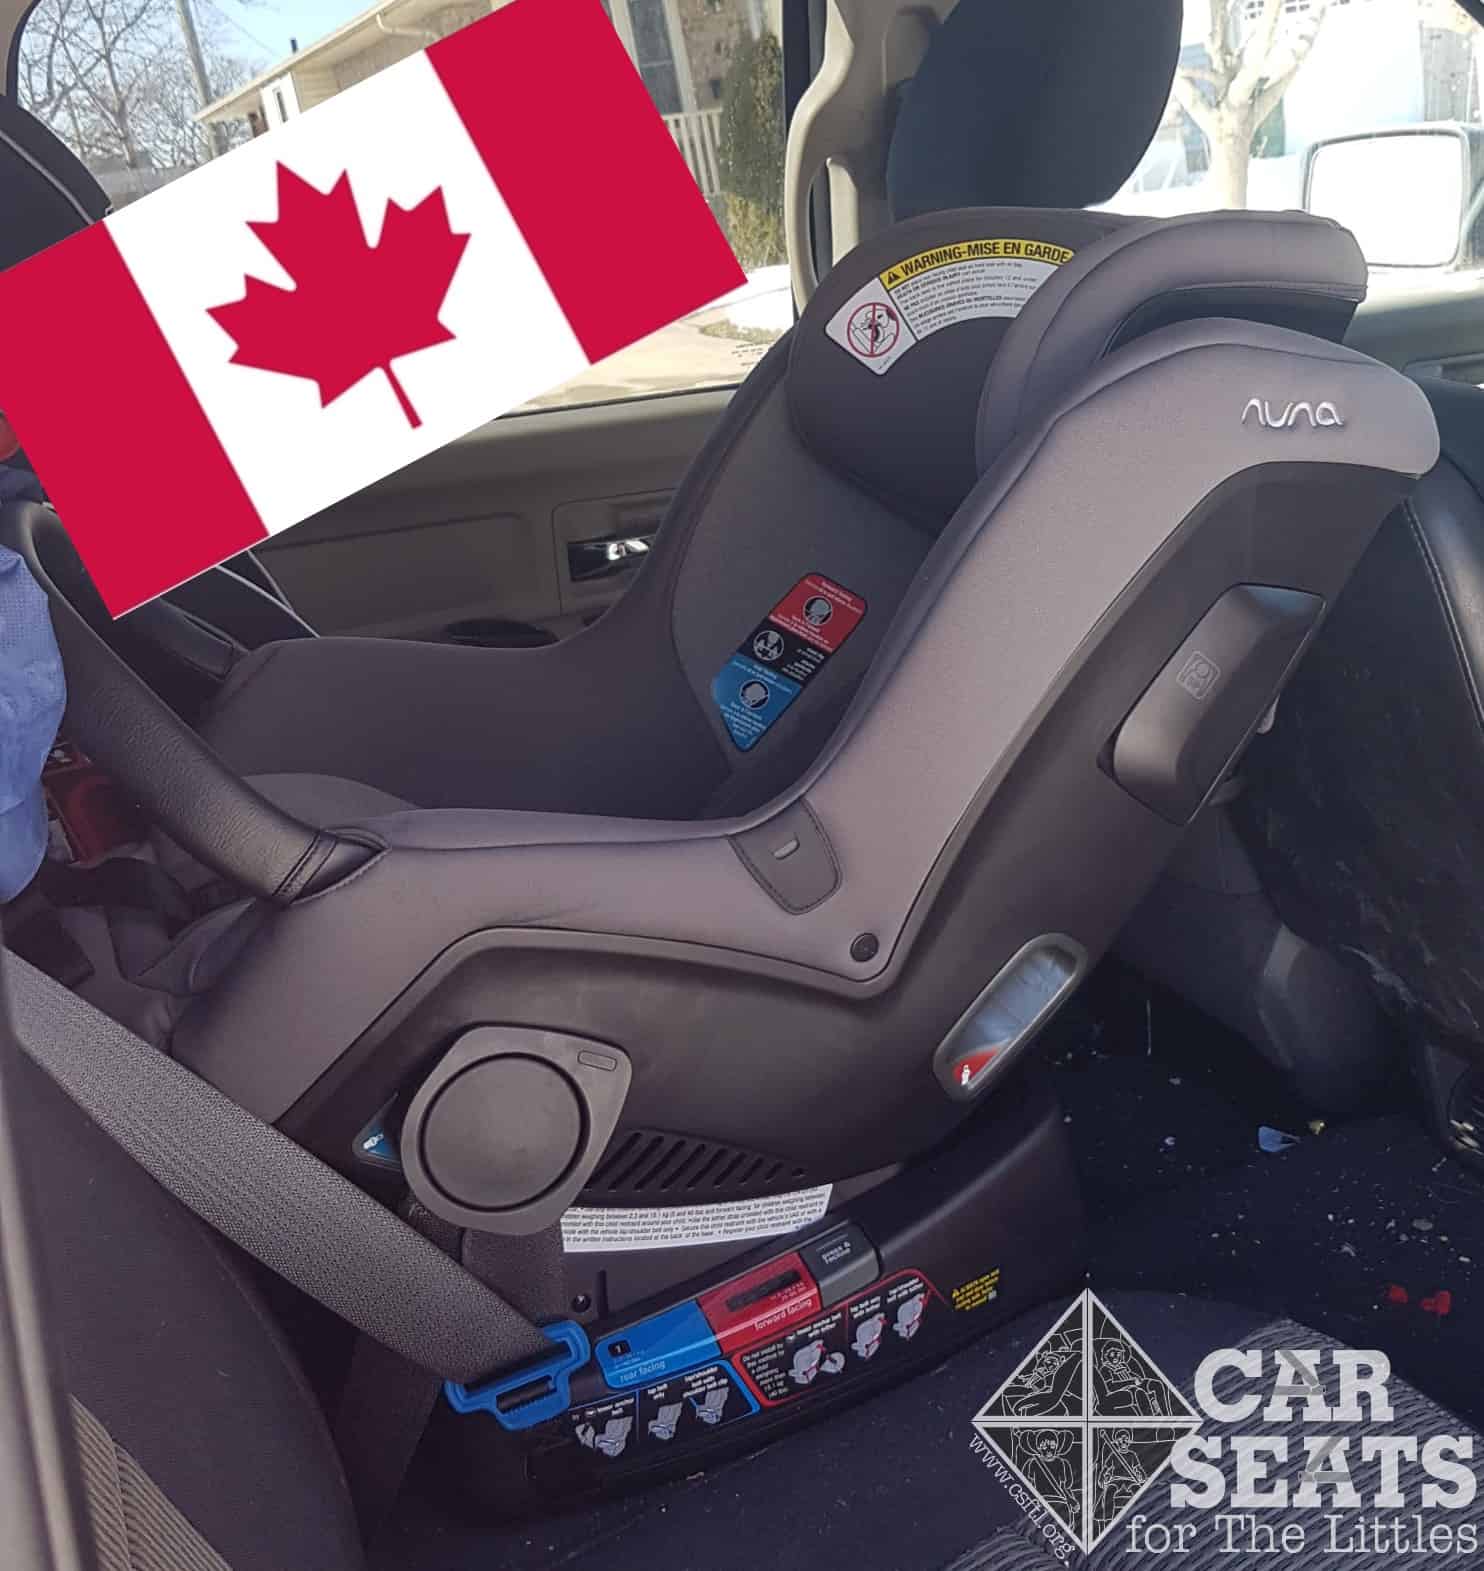 nuna rava infant convertible car seat